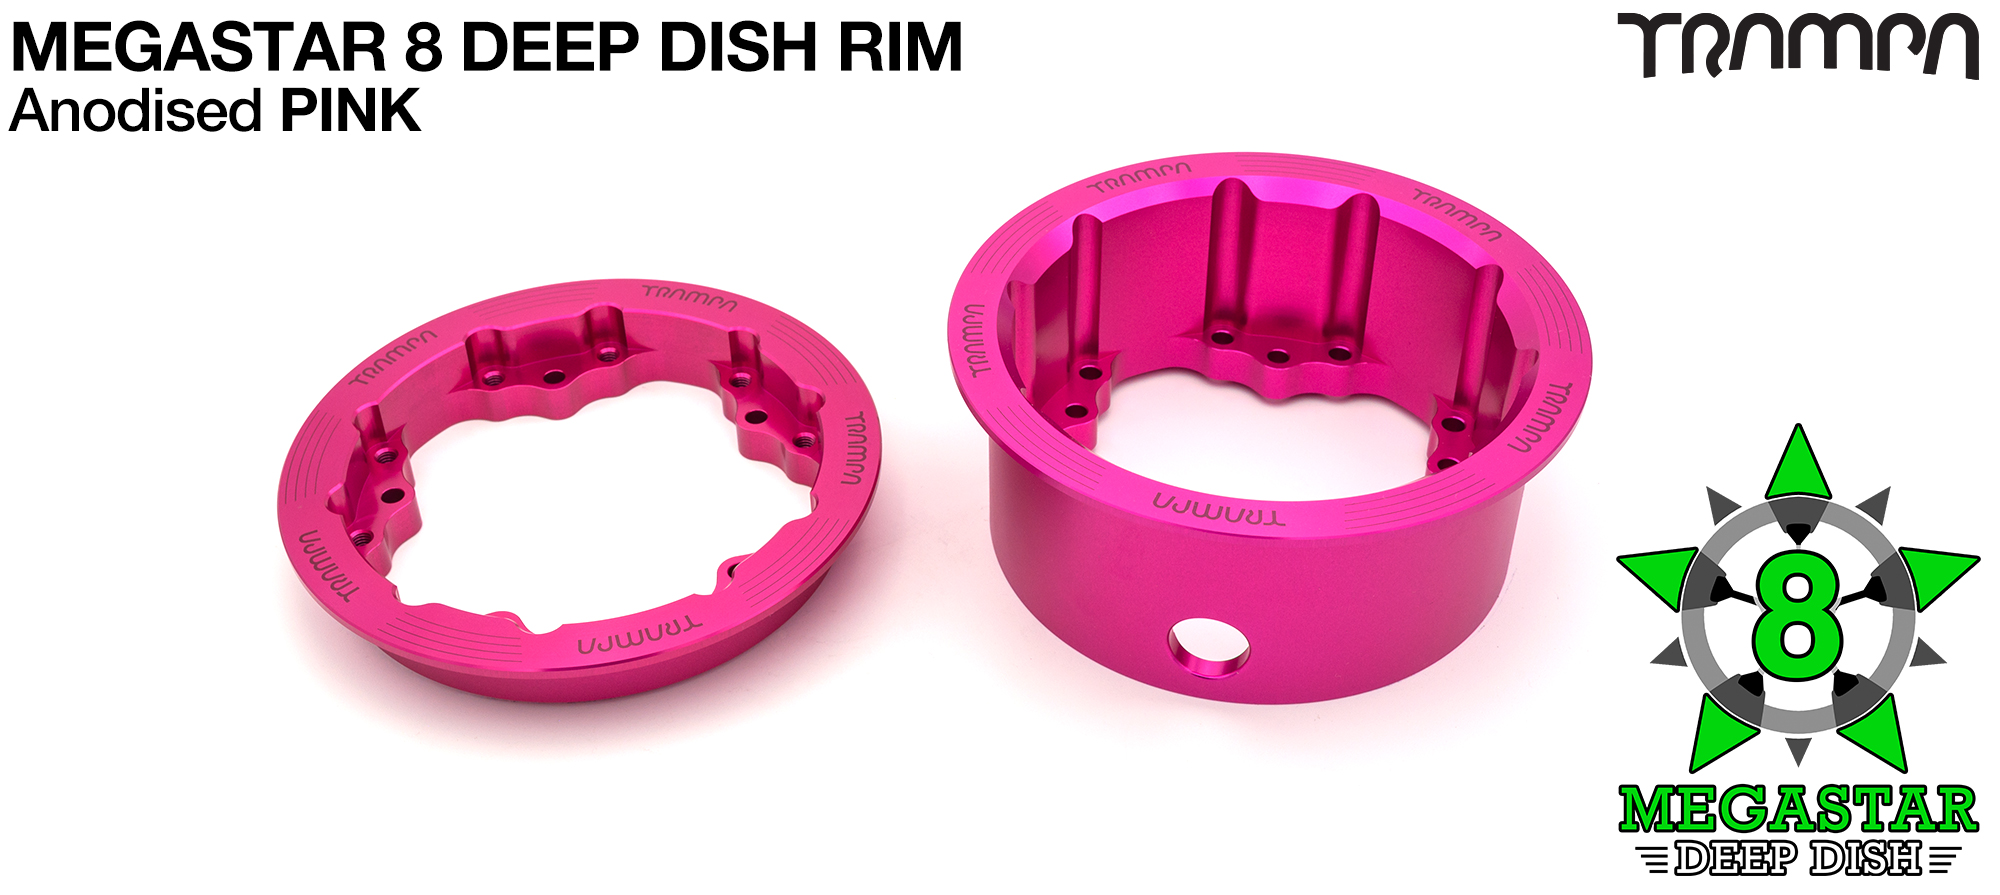 DEEP-DISH MEGASTAR 8 Rims on the FRONT - PINK 